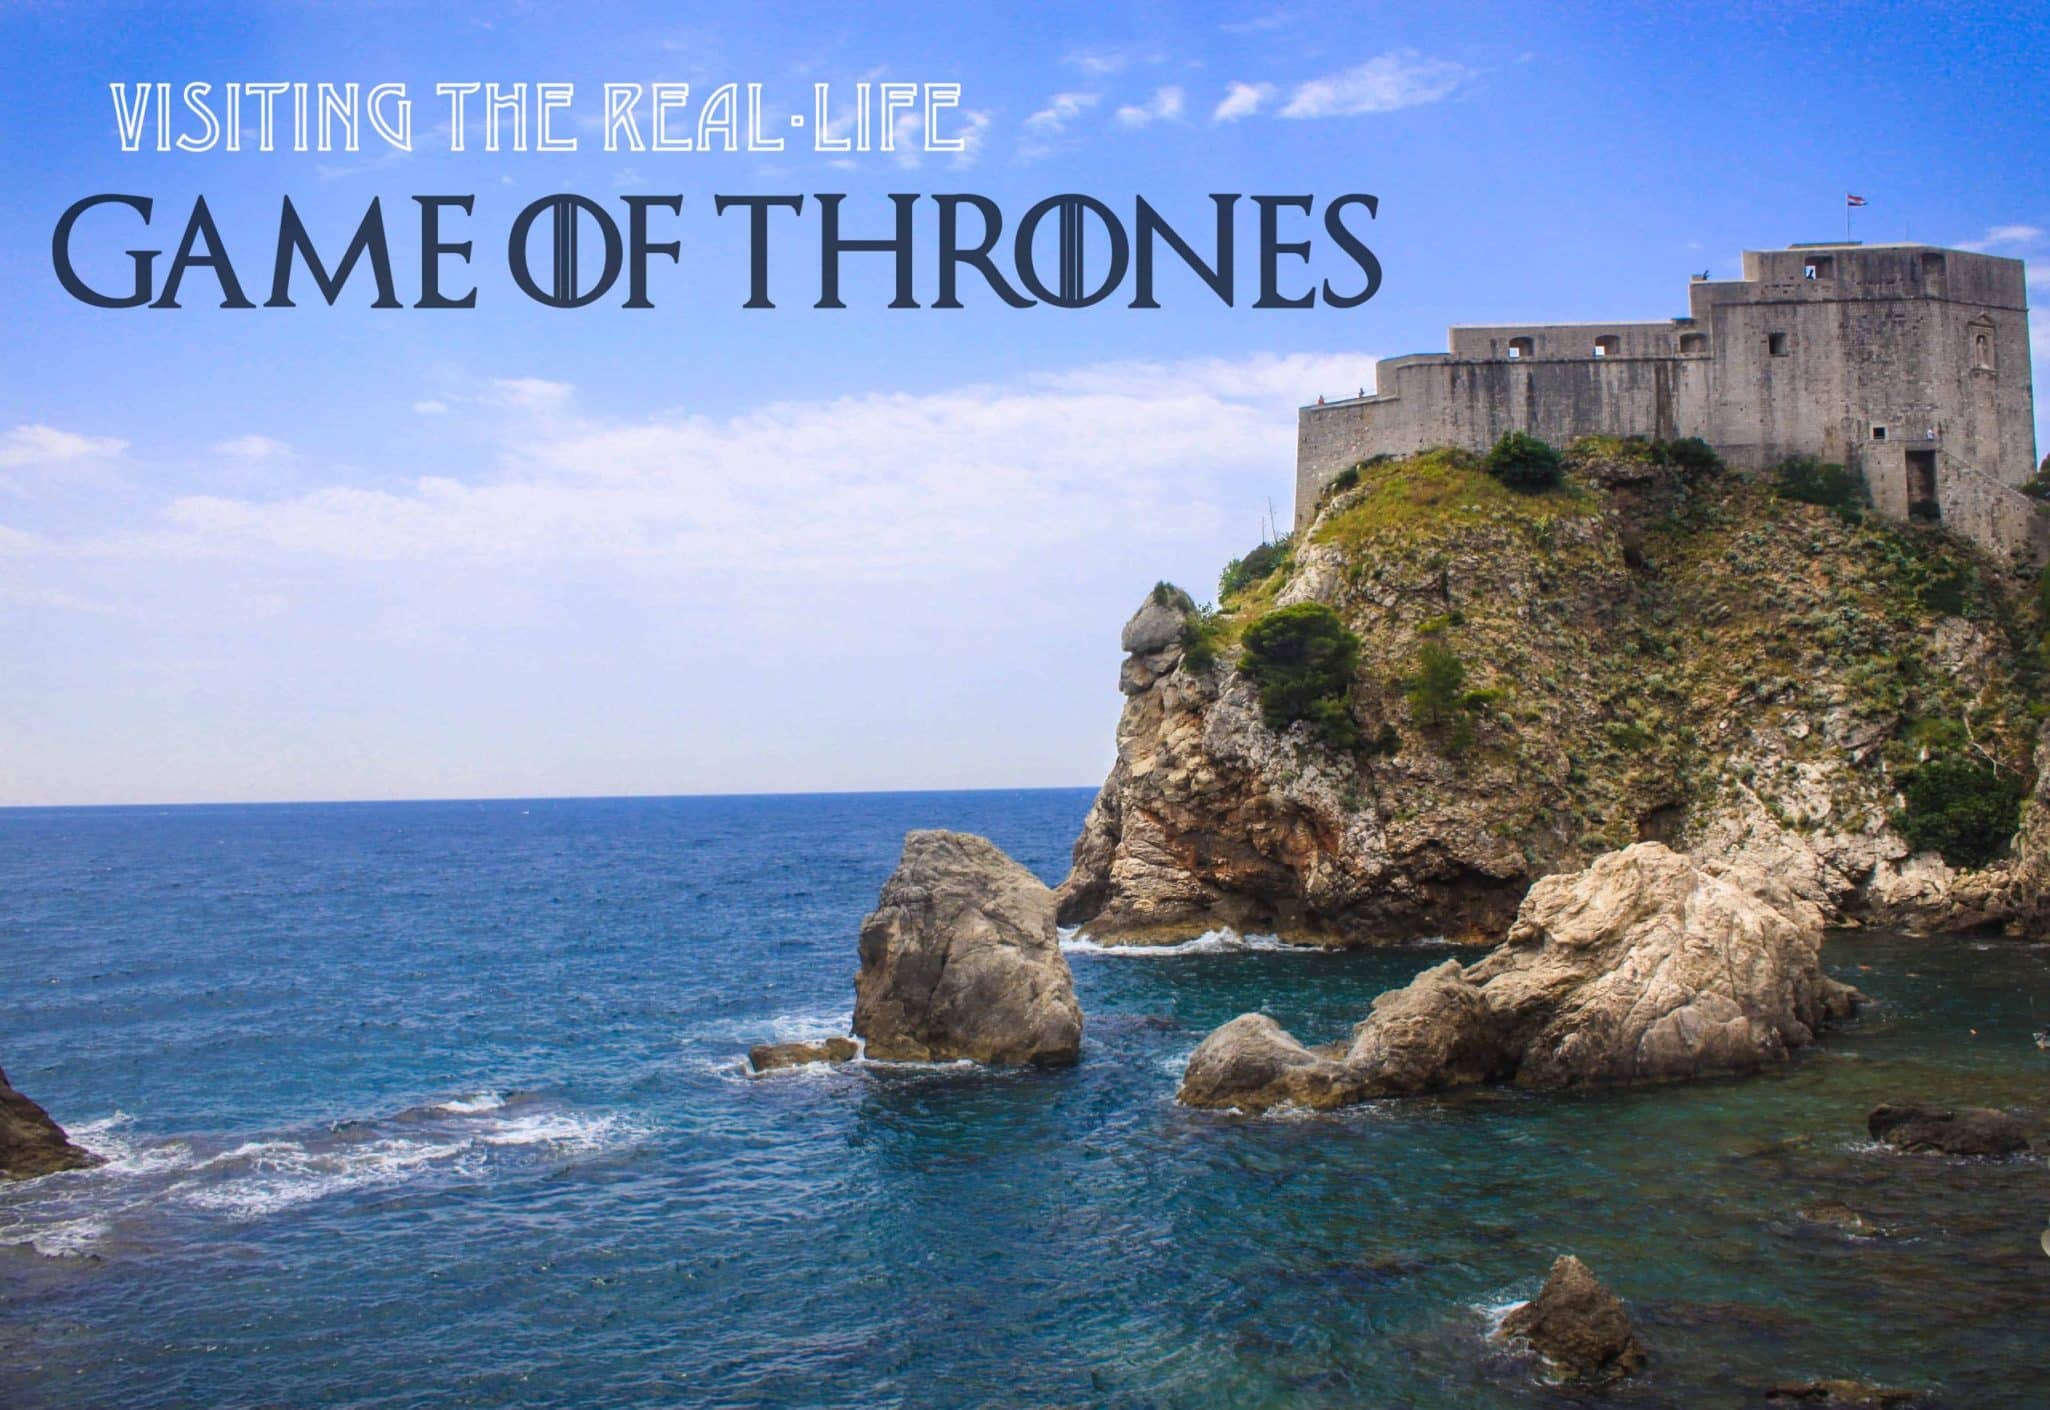 Croatia’s Game of Thrones locations: Dubrovnik